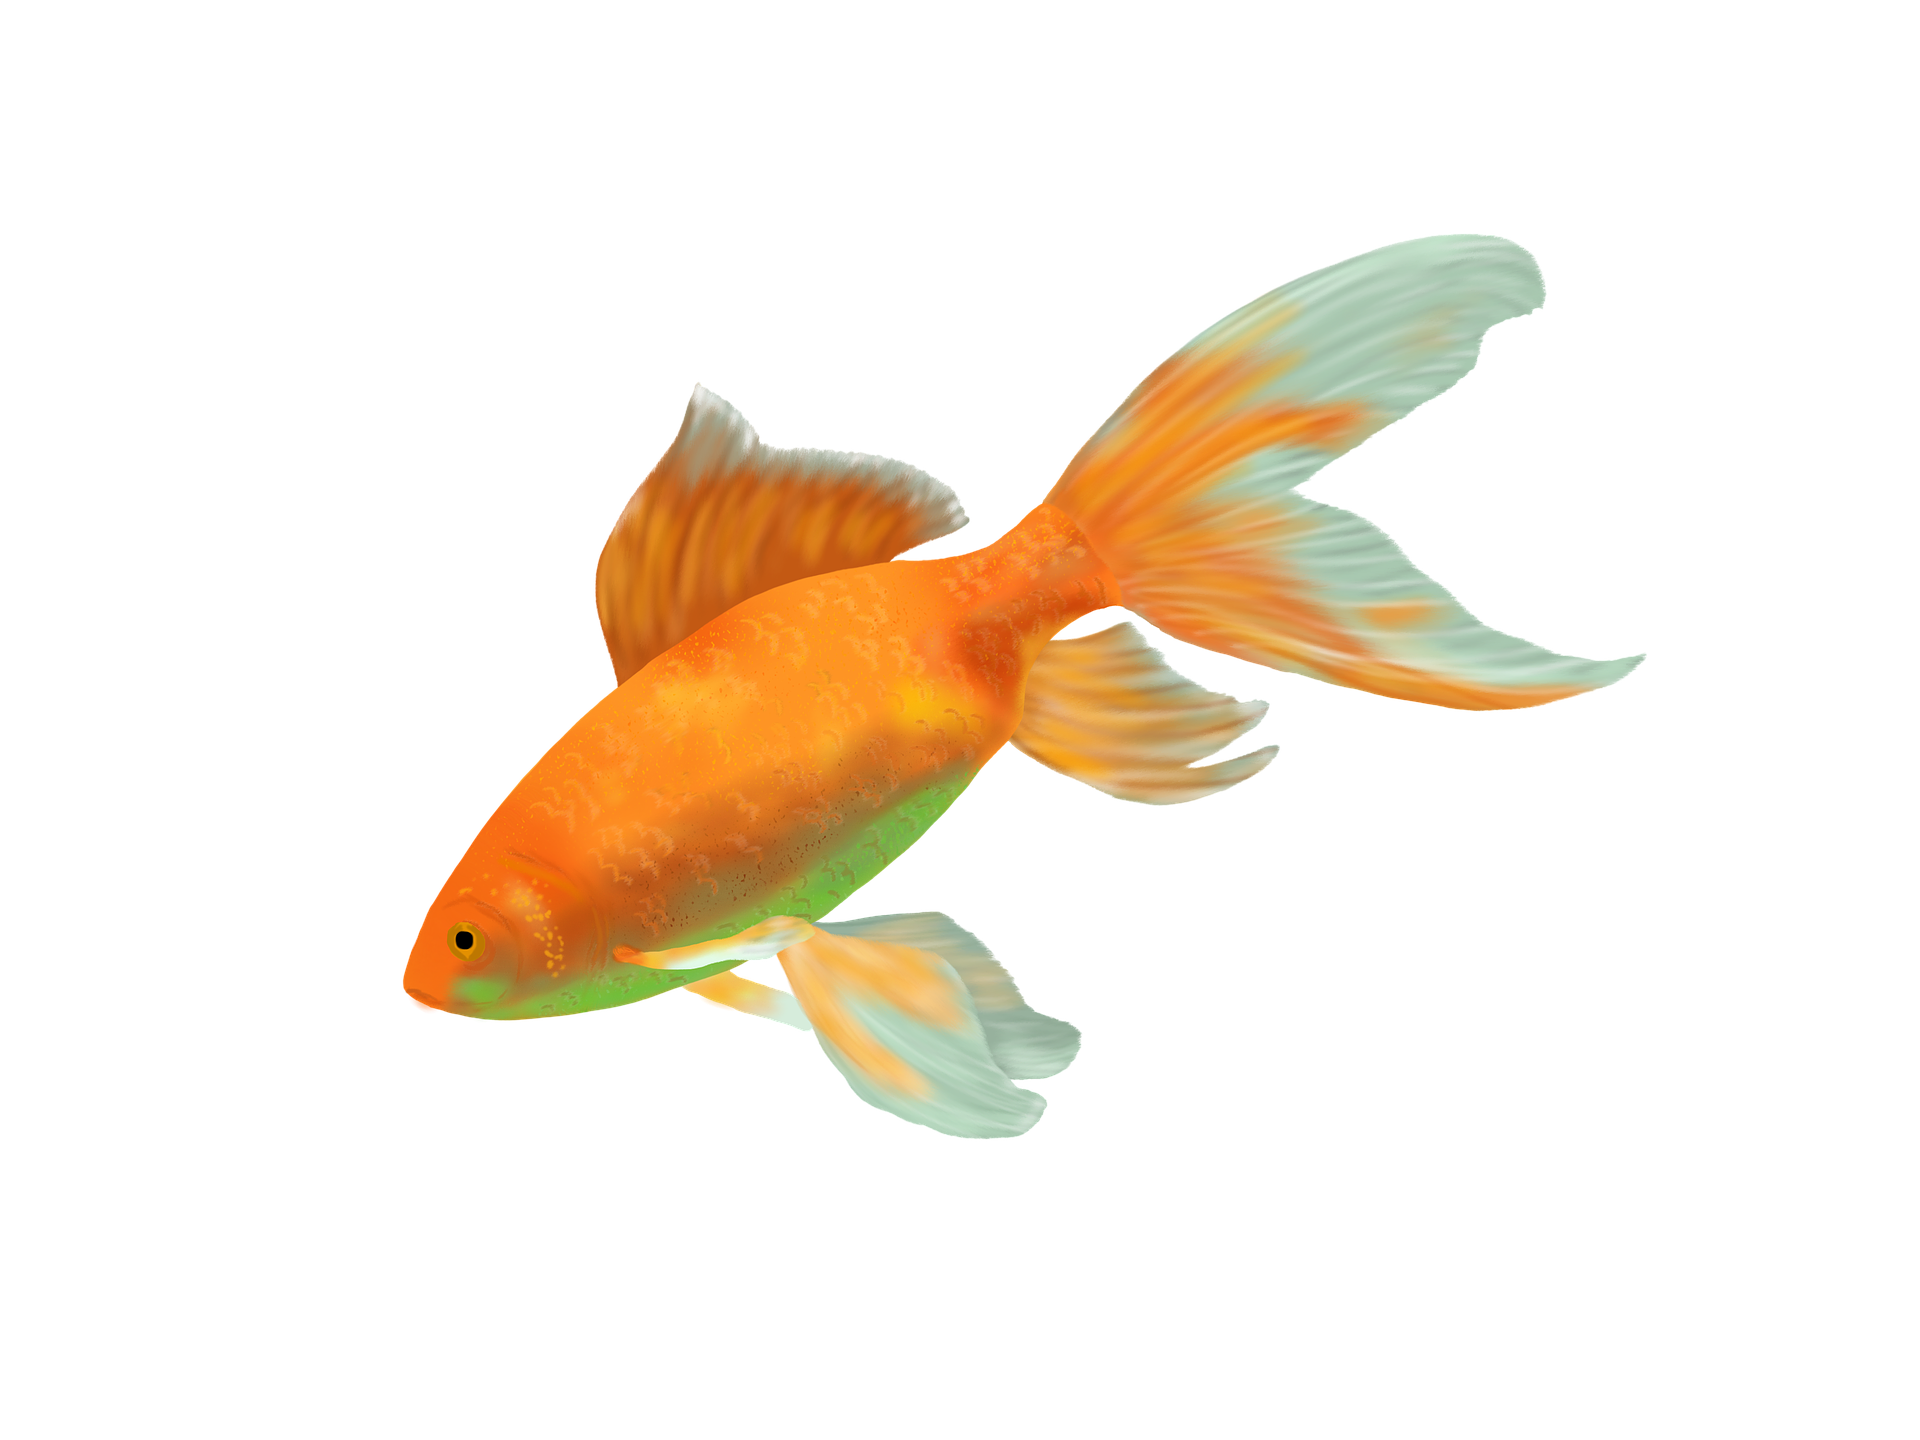 httpspixabay.comesillustrationspeces-de-colores-peces-oro-agua-799744.png